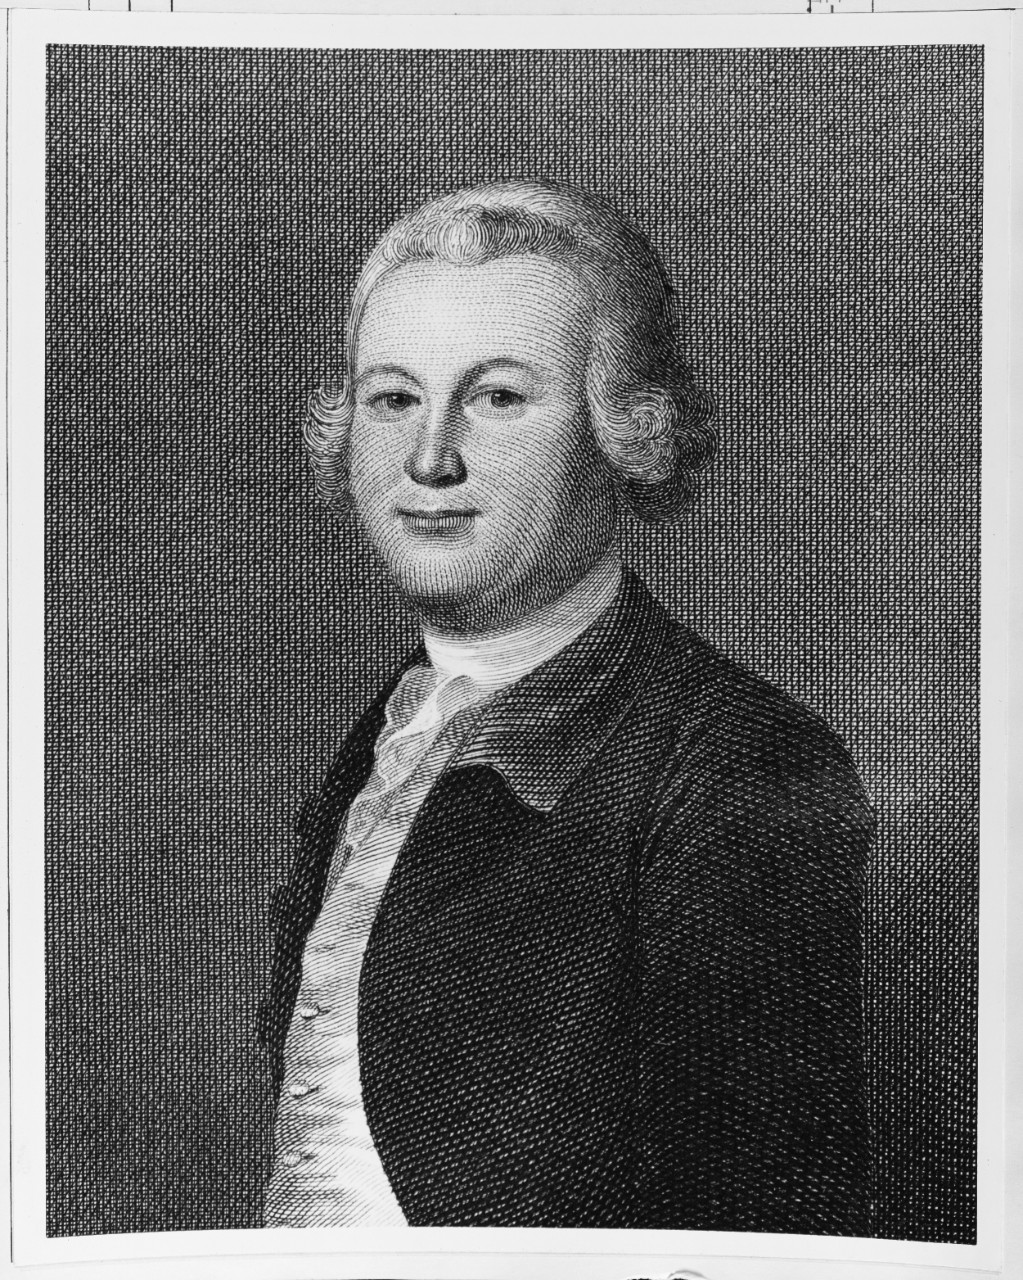 James Otis (1725-1783), American politician